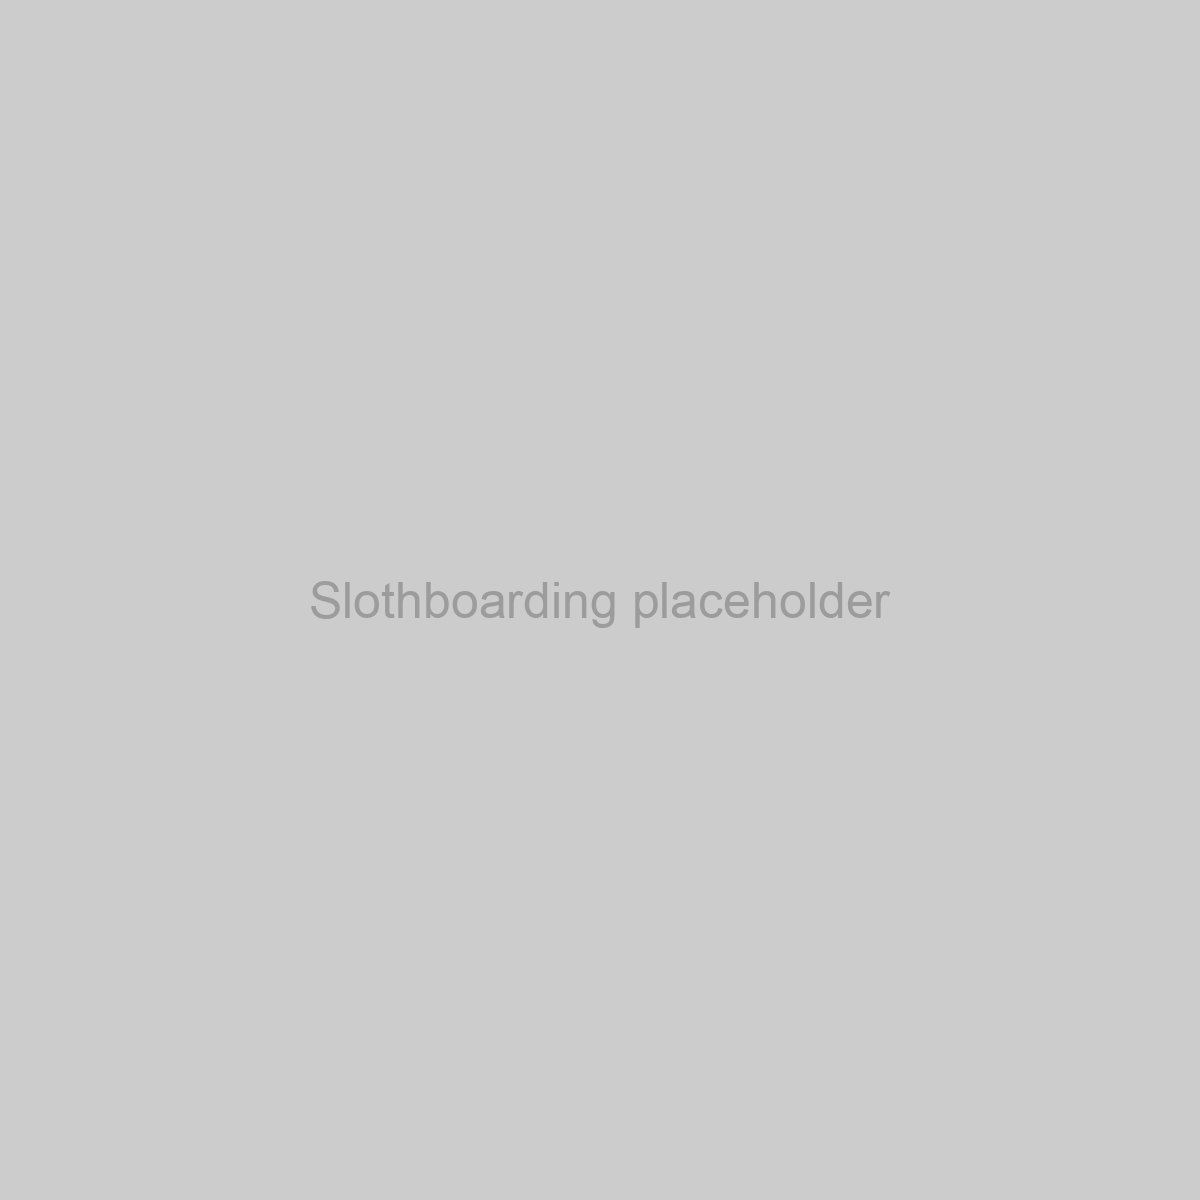 Slothboarding Placeholder Image